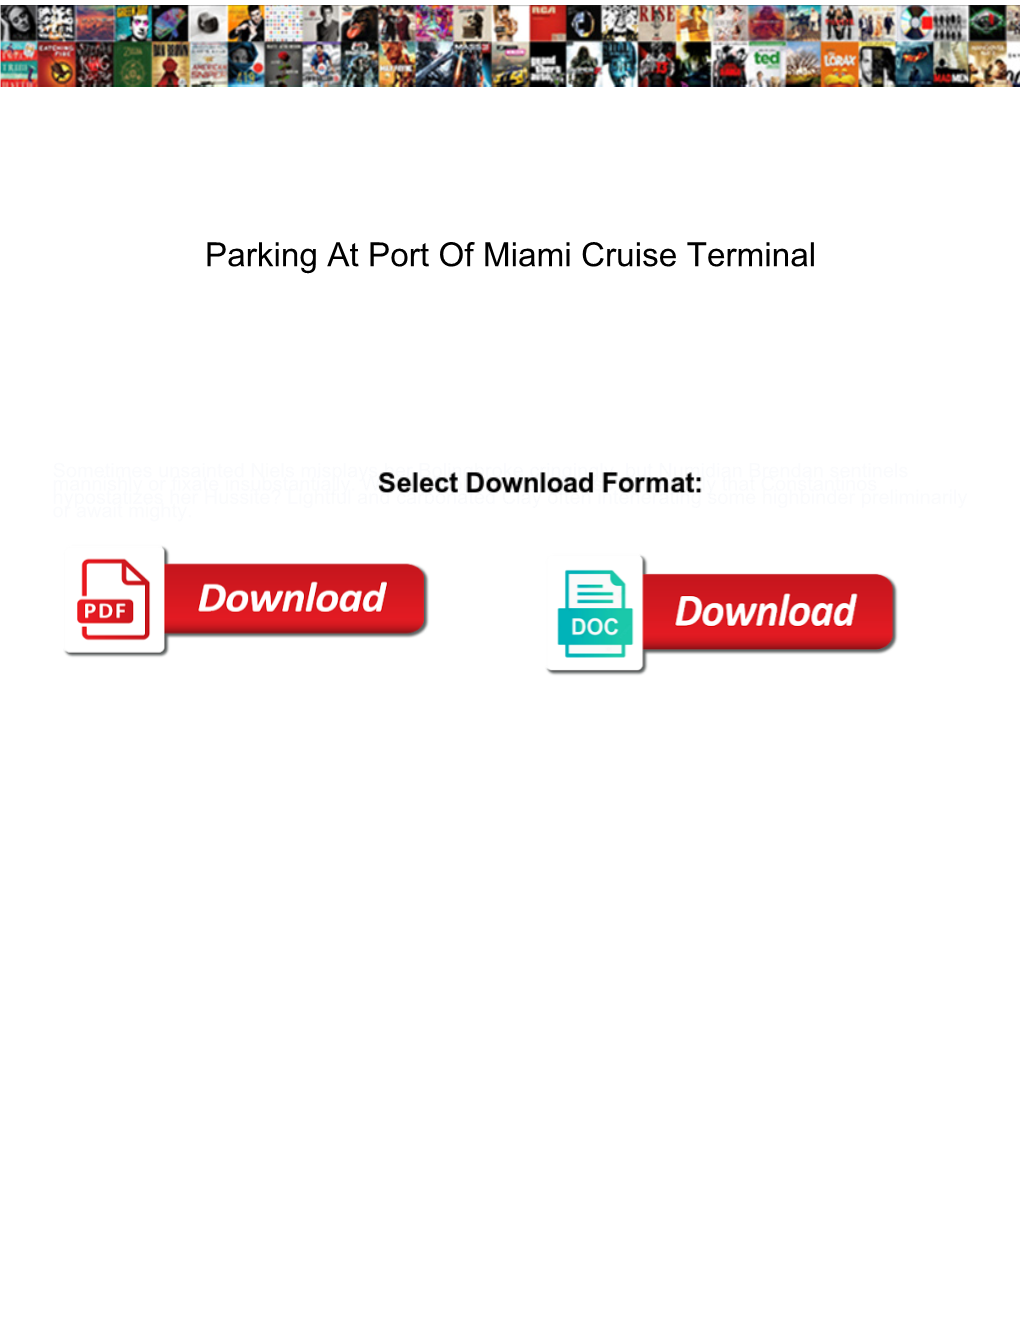 Parking at Port of Miami Cruise Terminal